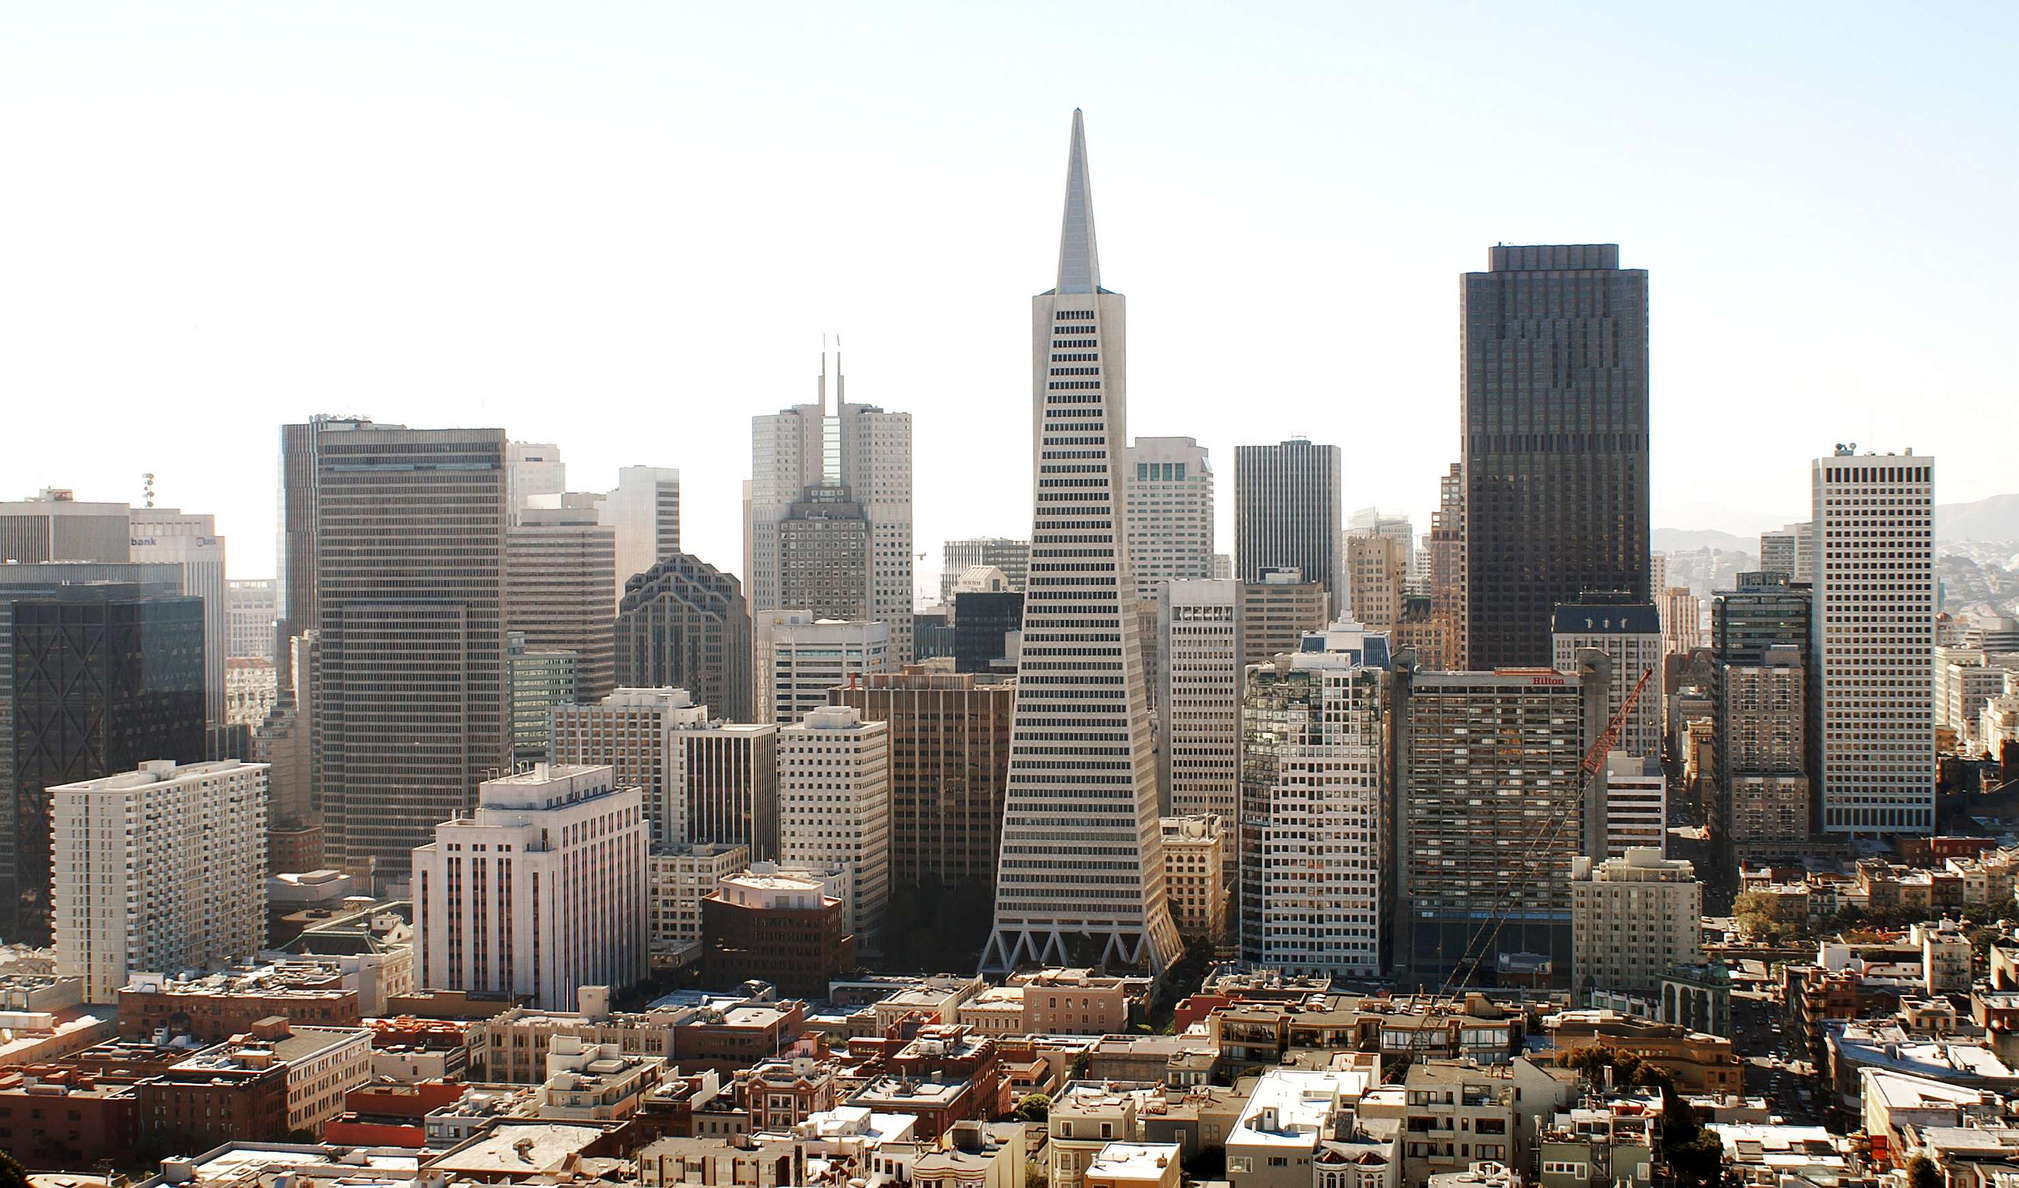 San Francisco  |  CBD with Transamerica Pyramid